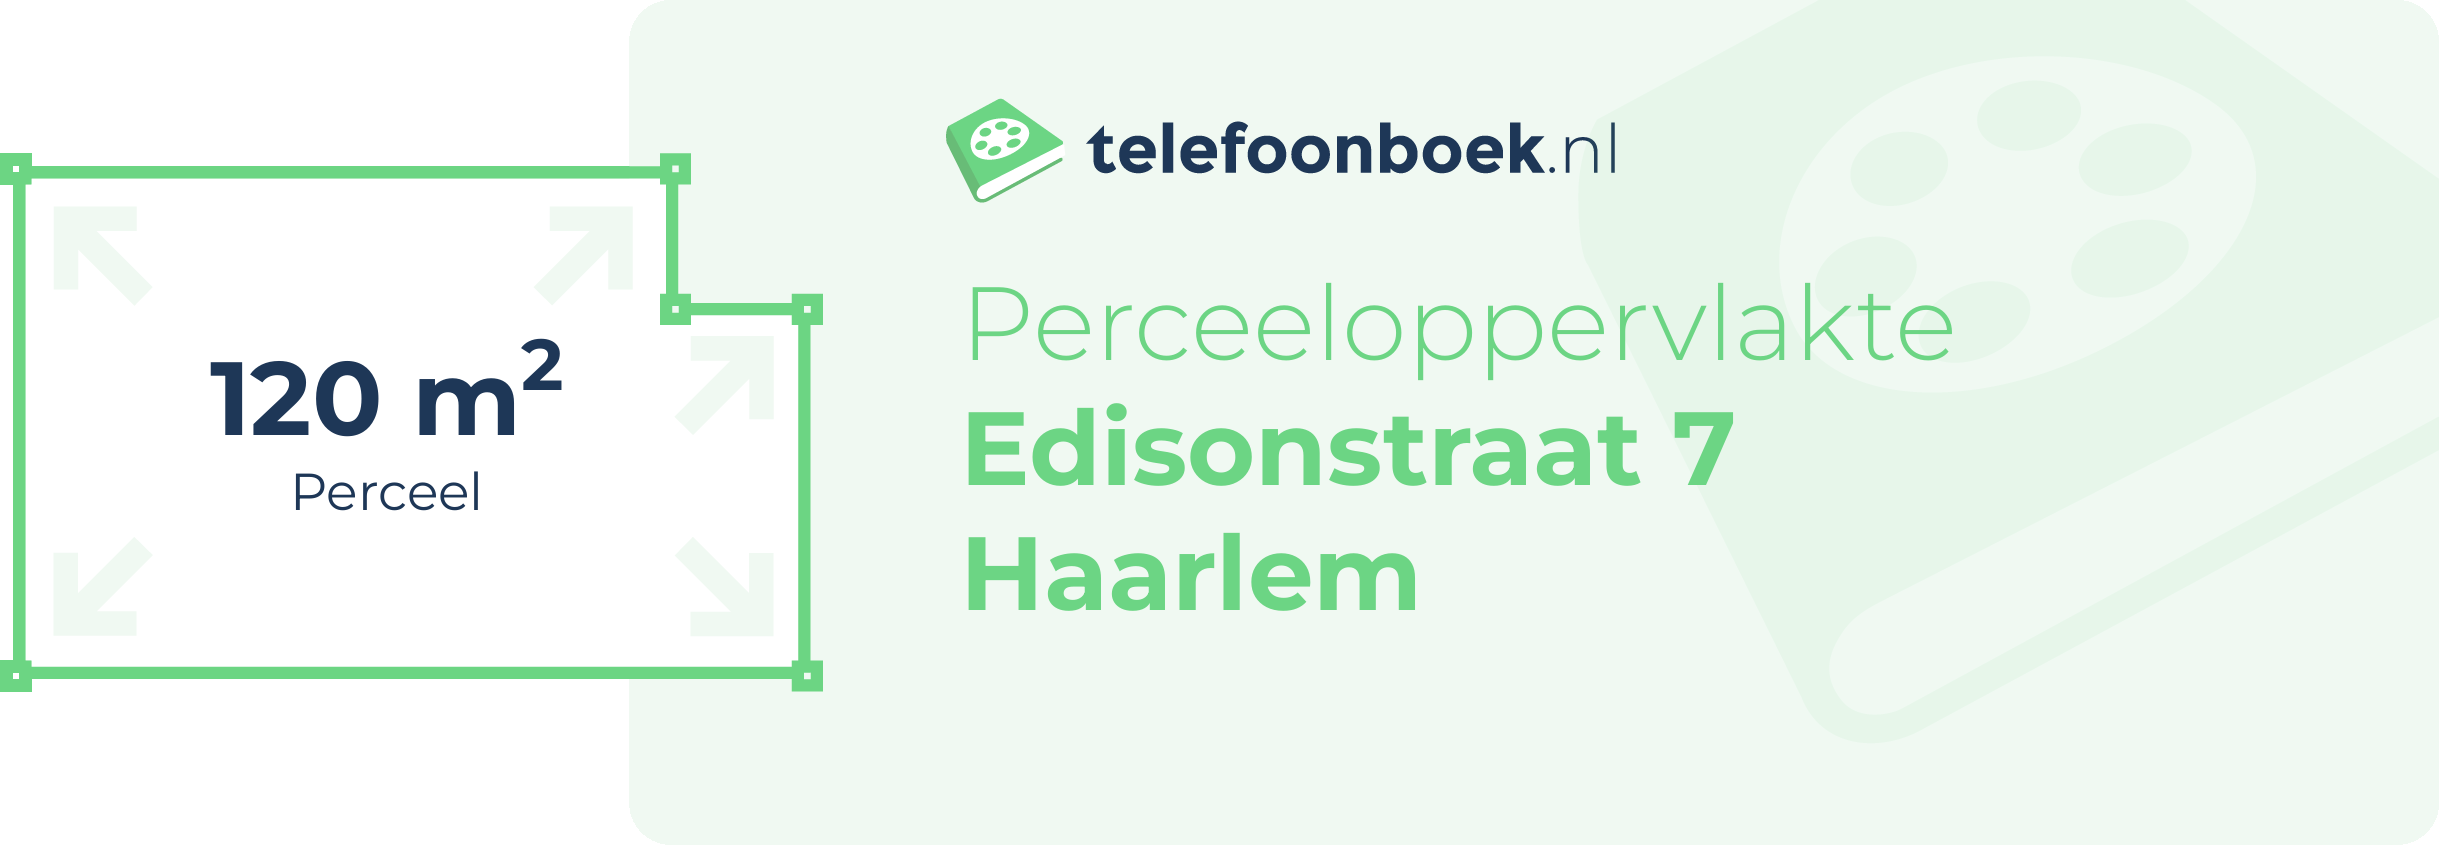 Perceeloppervlakte Edisonstraat 7 Haarlem